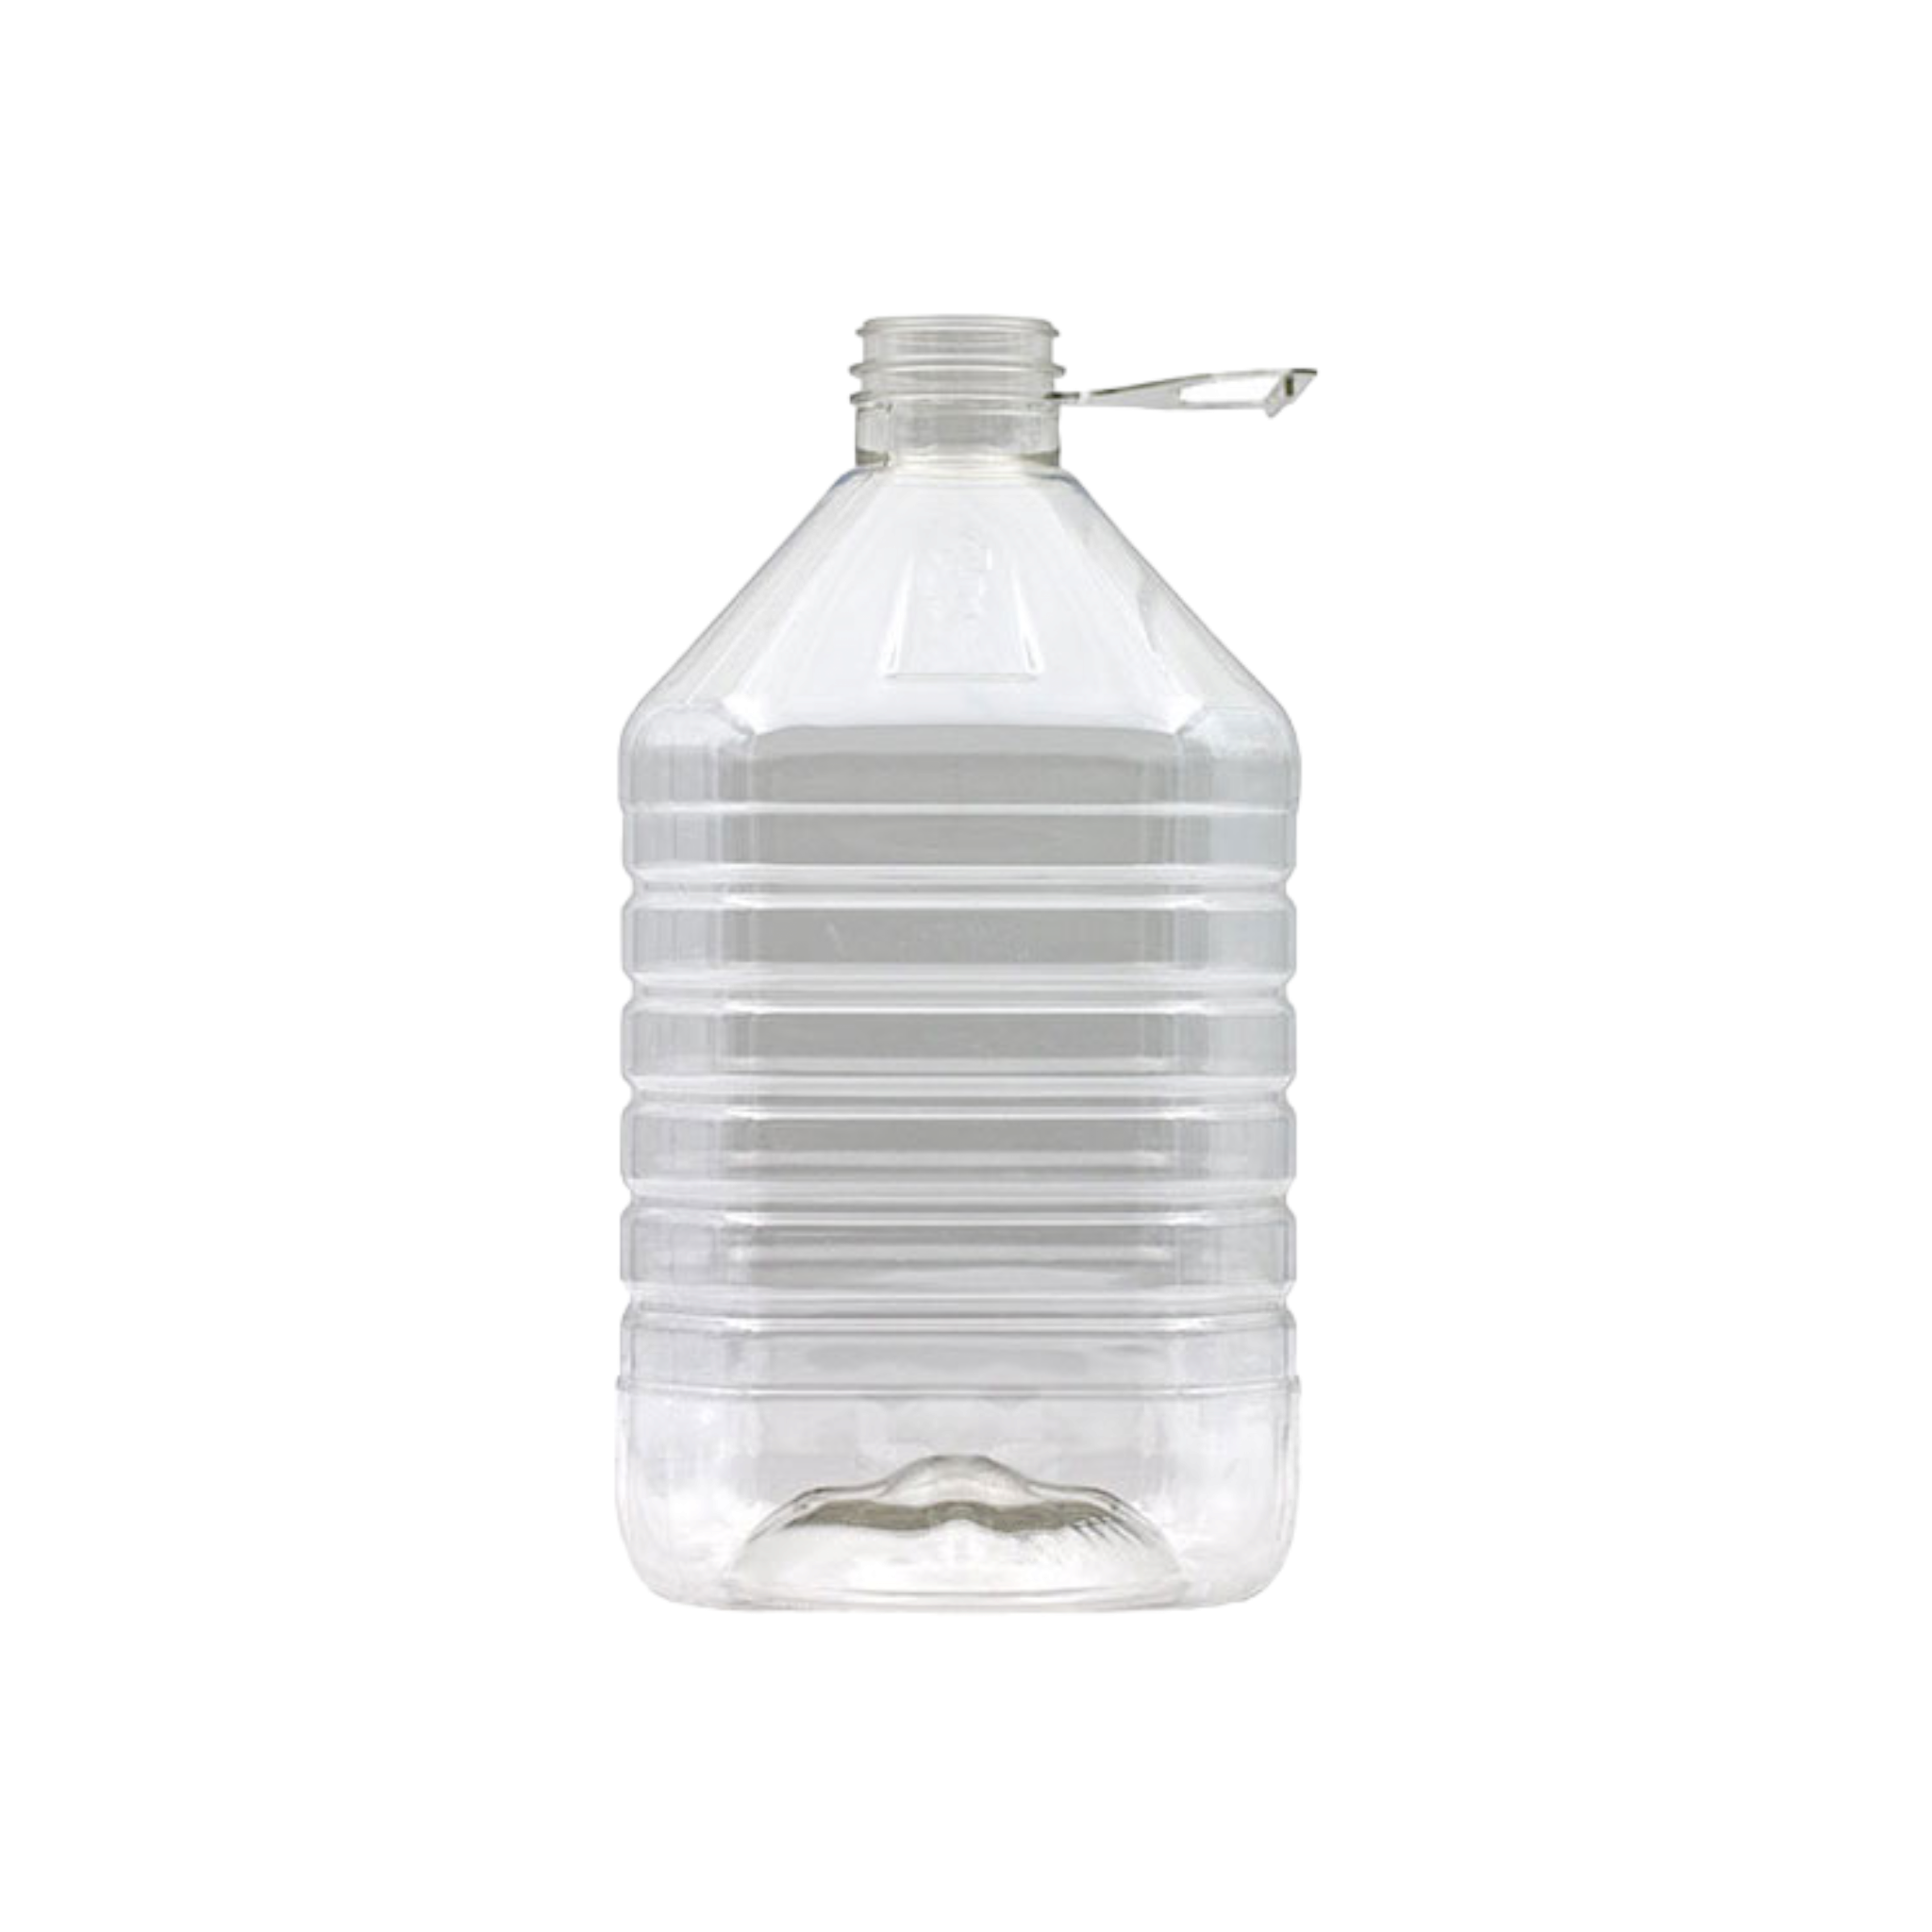 5L Plastic Water Bottle Grip Design with Tag Handle & Cap